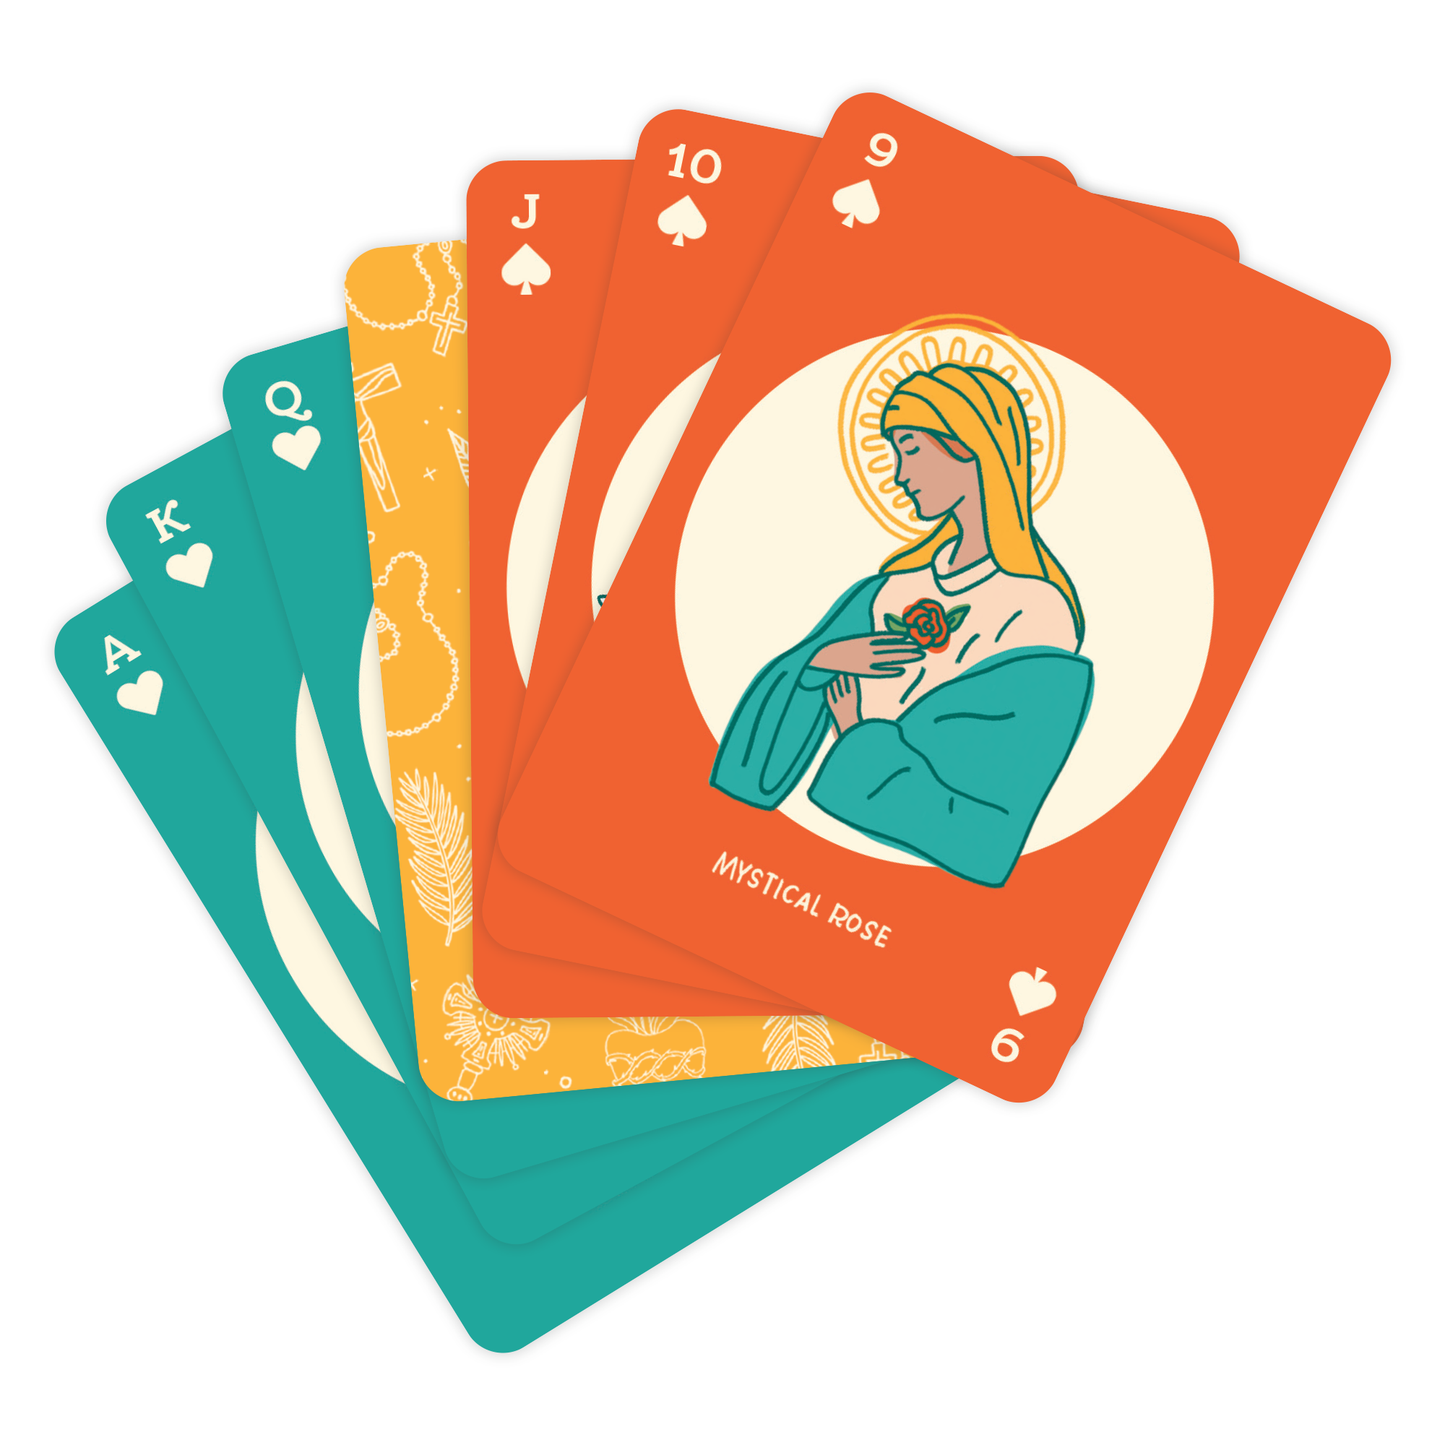 Catholic Playing Cards: Marian Edition